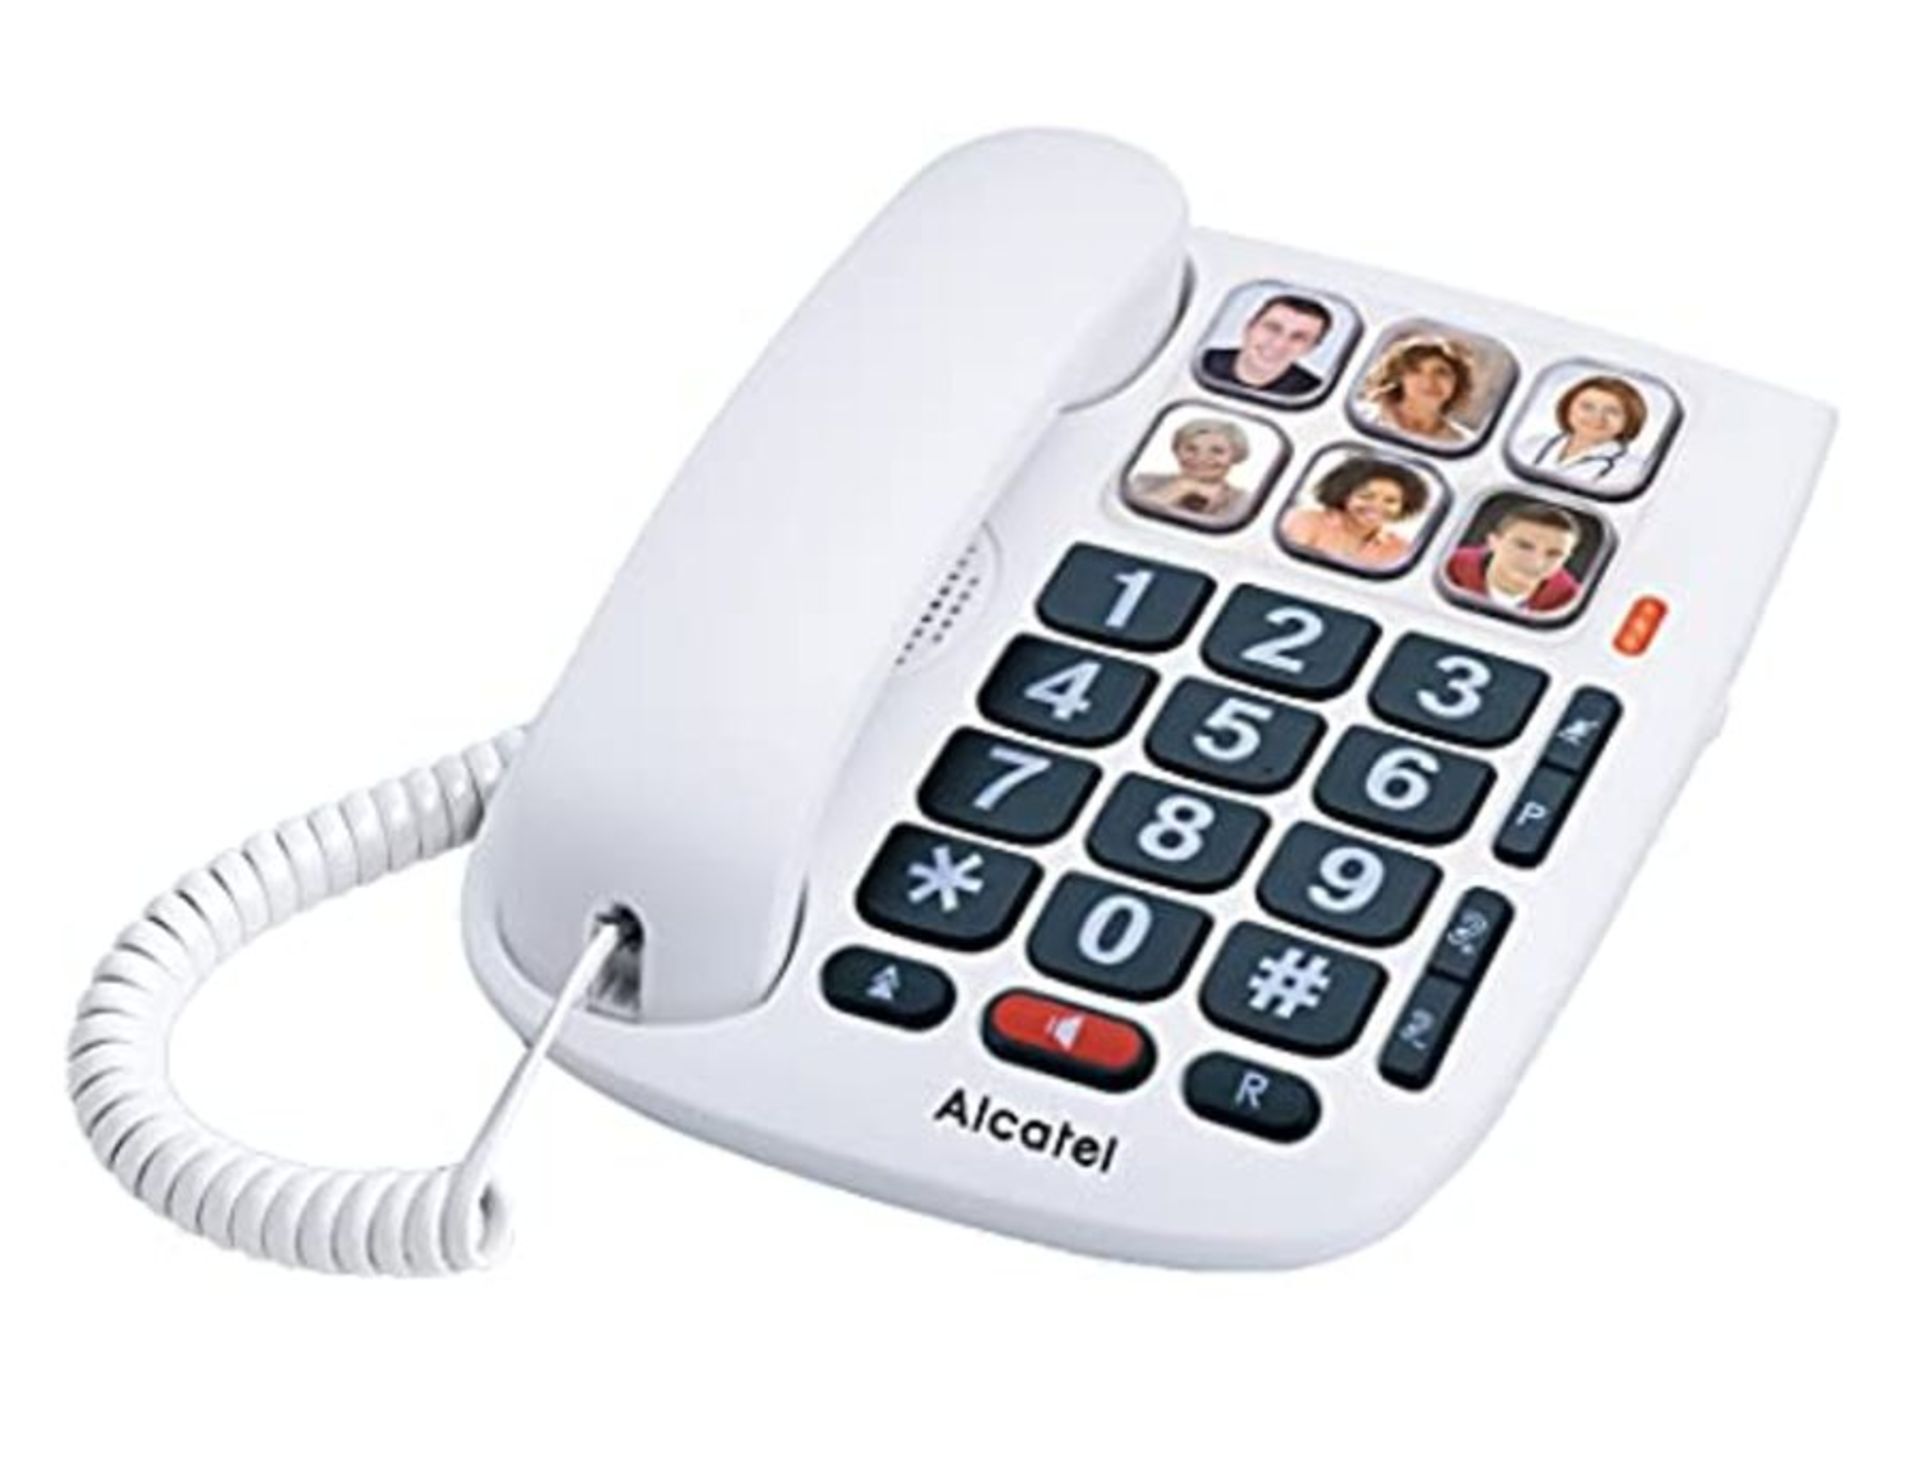 Alcatel Max 10 Corded Phone for Seniors White. - Image 4 of 6